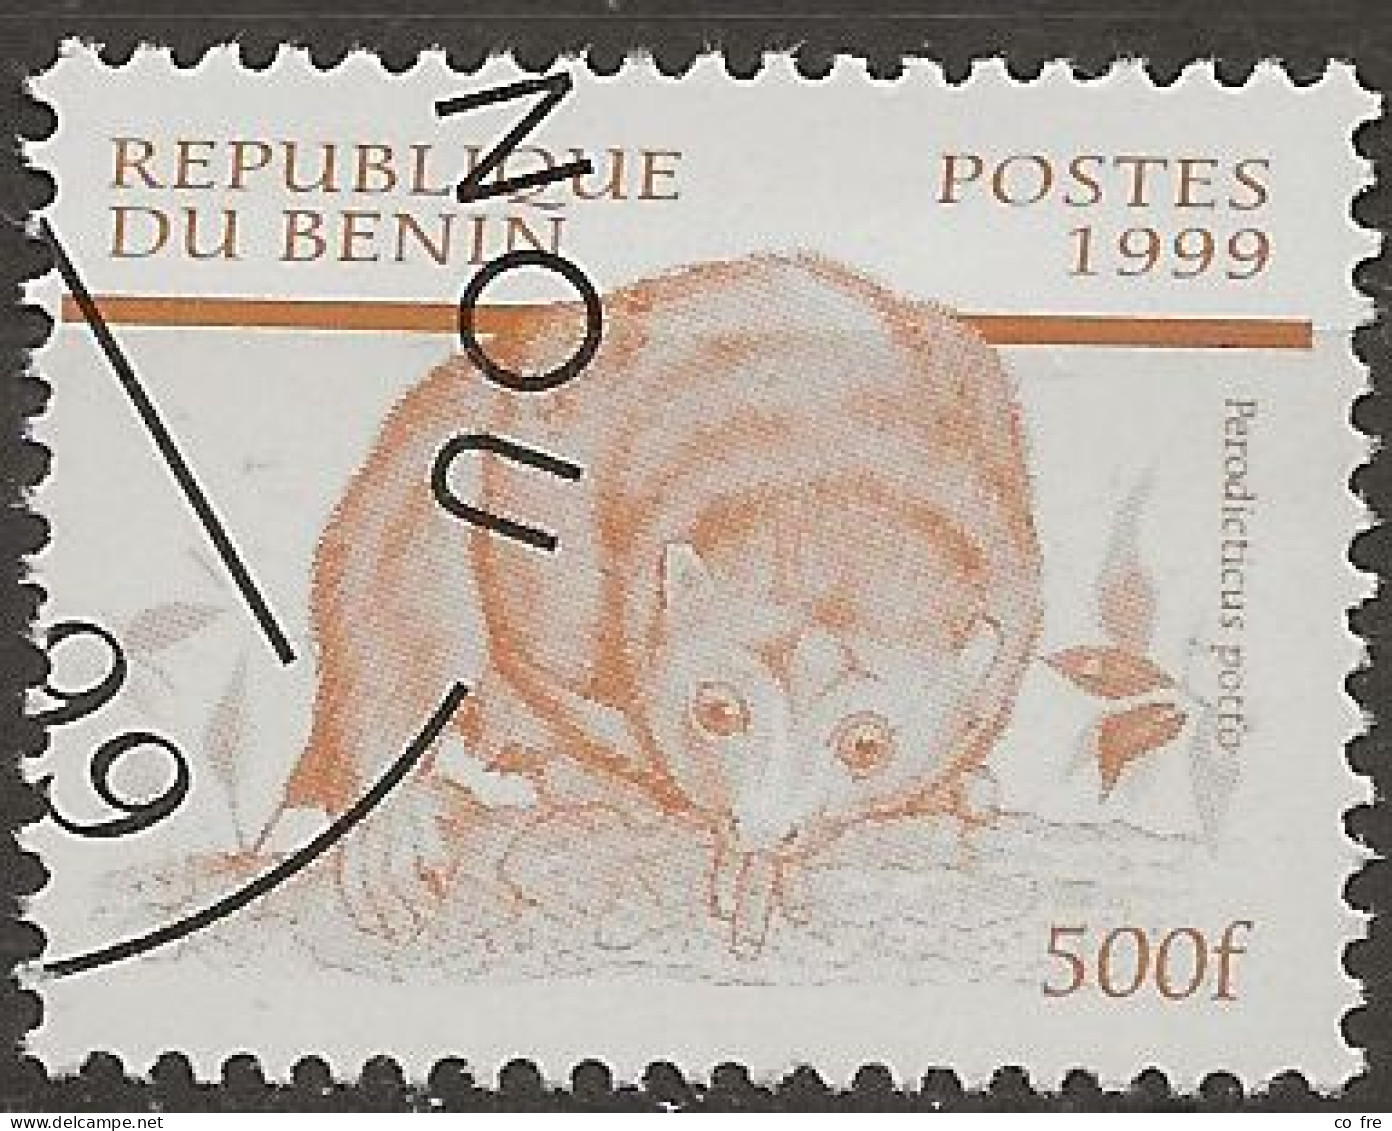 Bénin N°885 (ref.2) - Benin – Dahomey (1960-...)